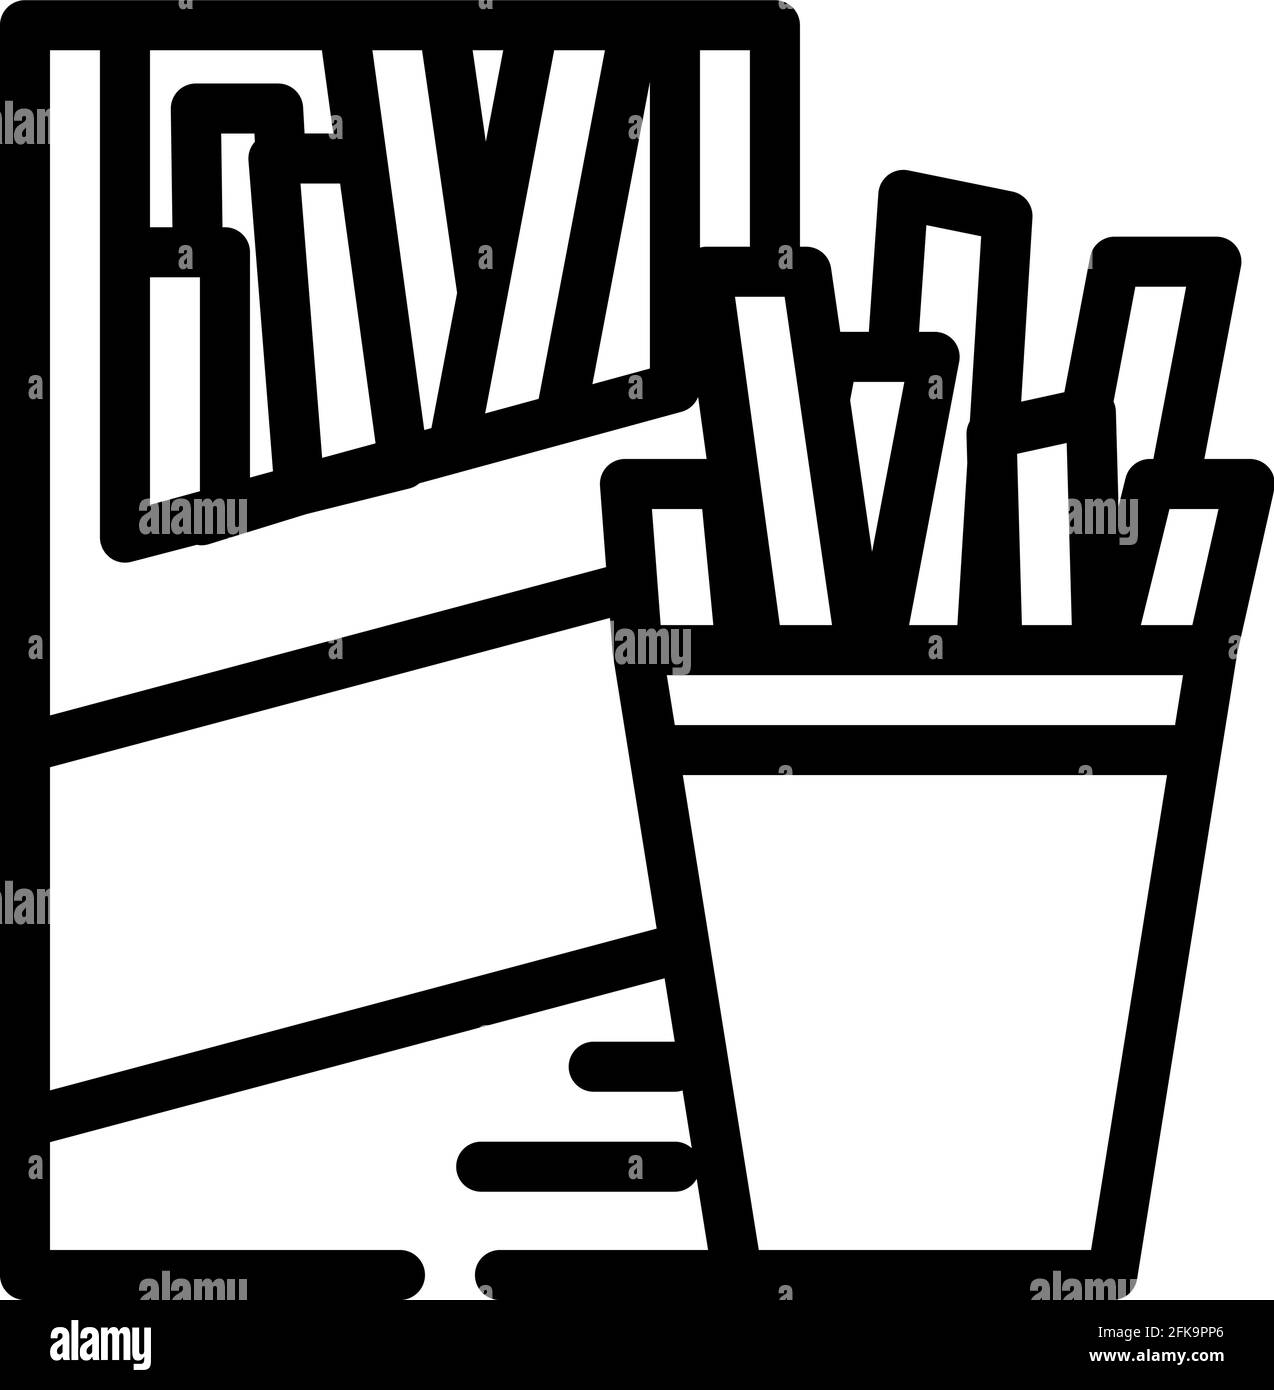 straws snack line icon vector illustration Stock Vector